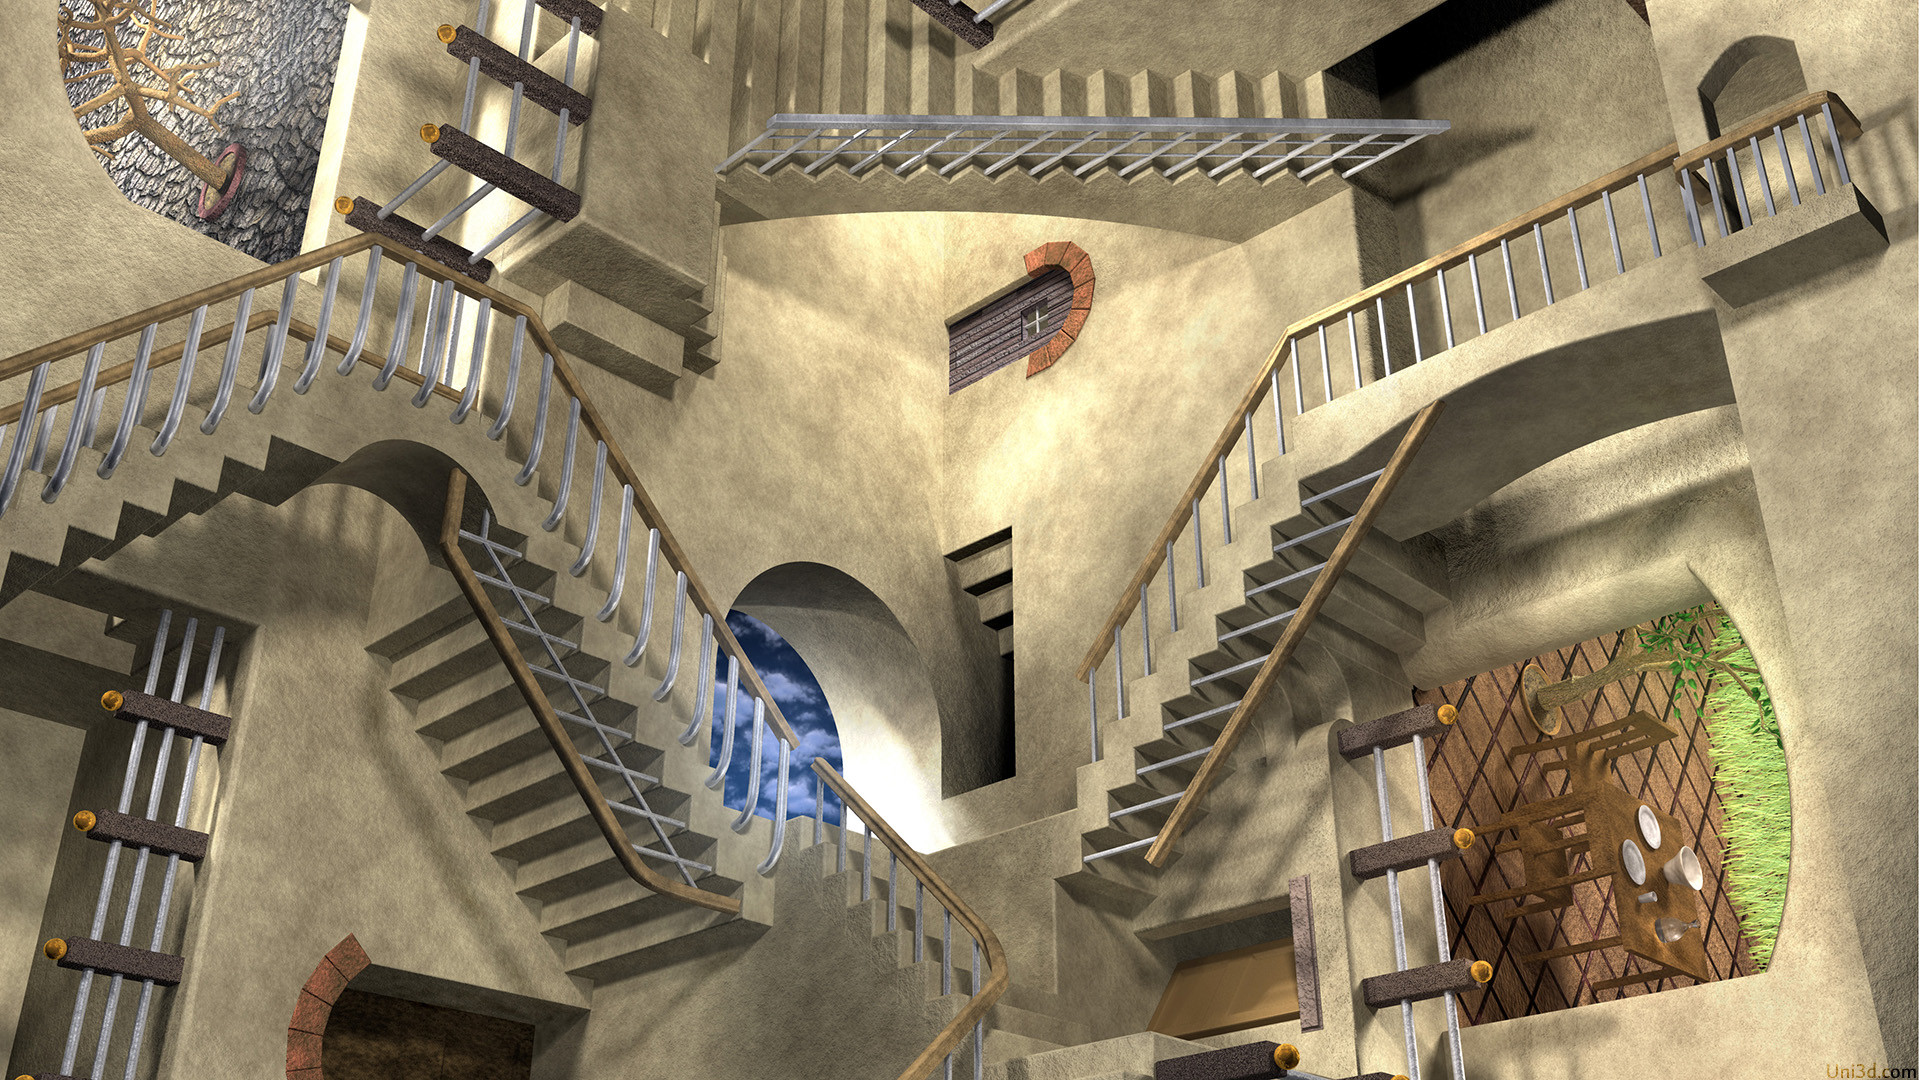 mc escher wallpaper,architecture,building,arch,stairs,medieval architecture